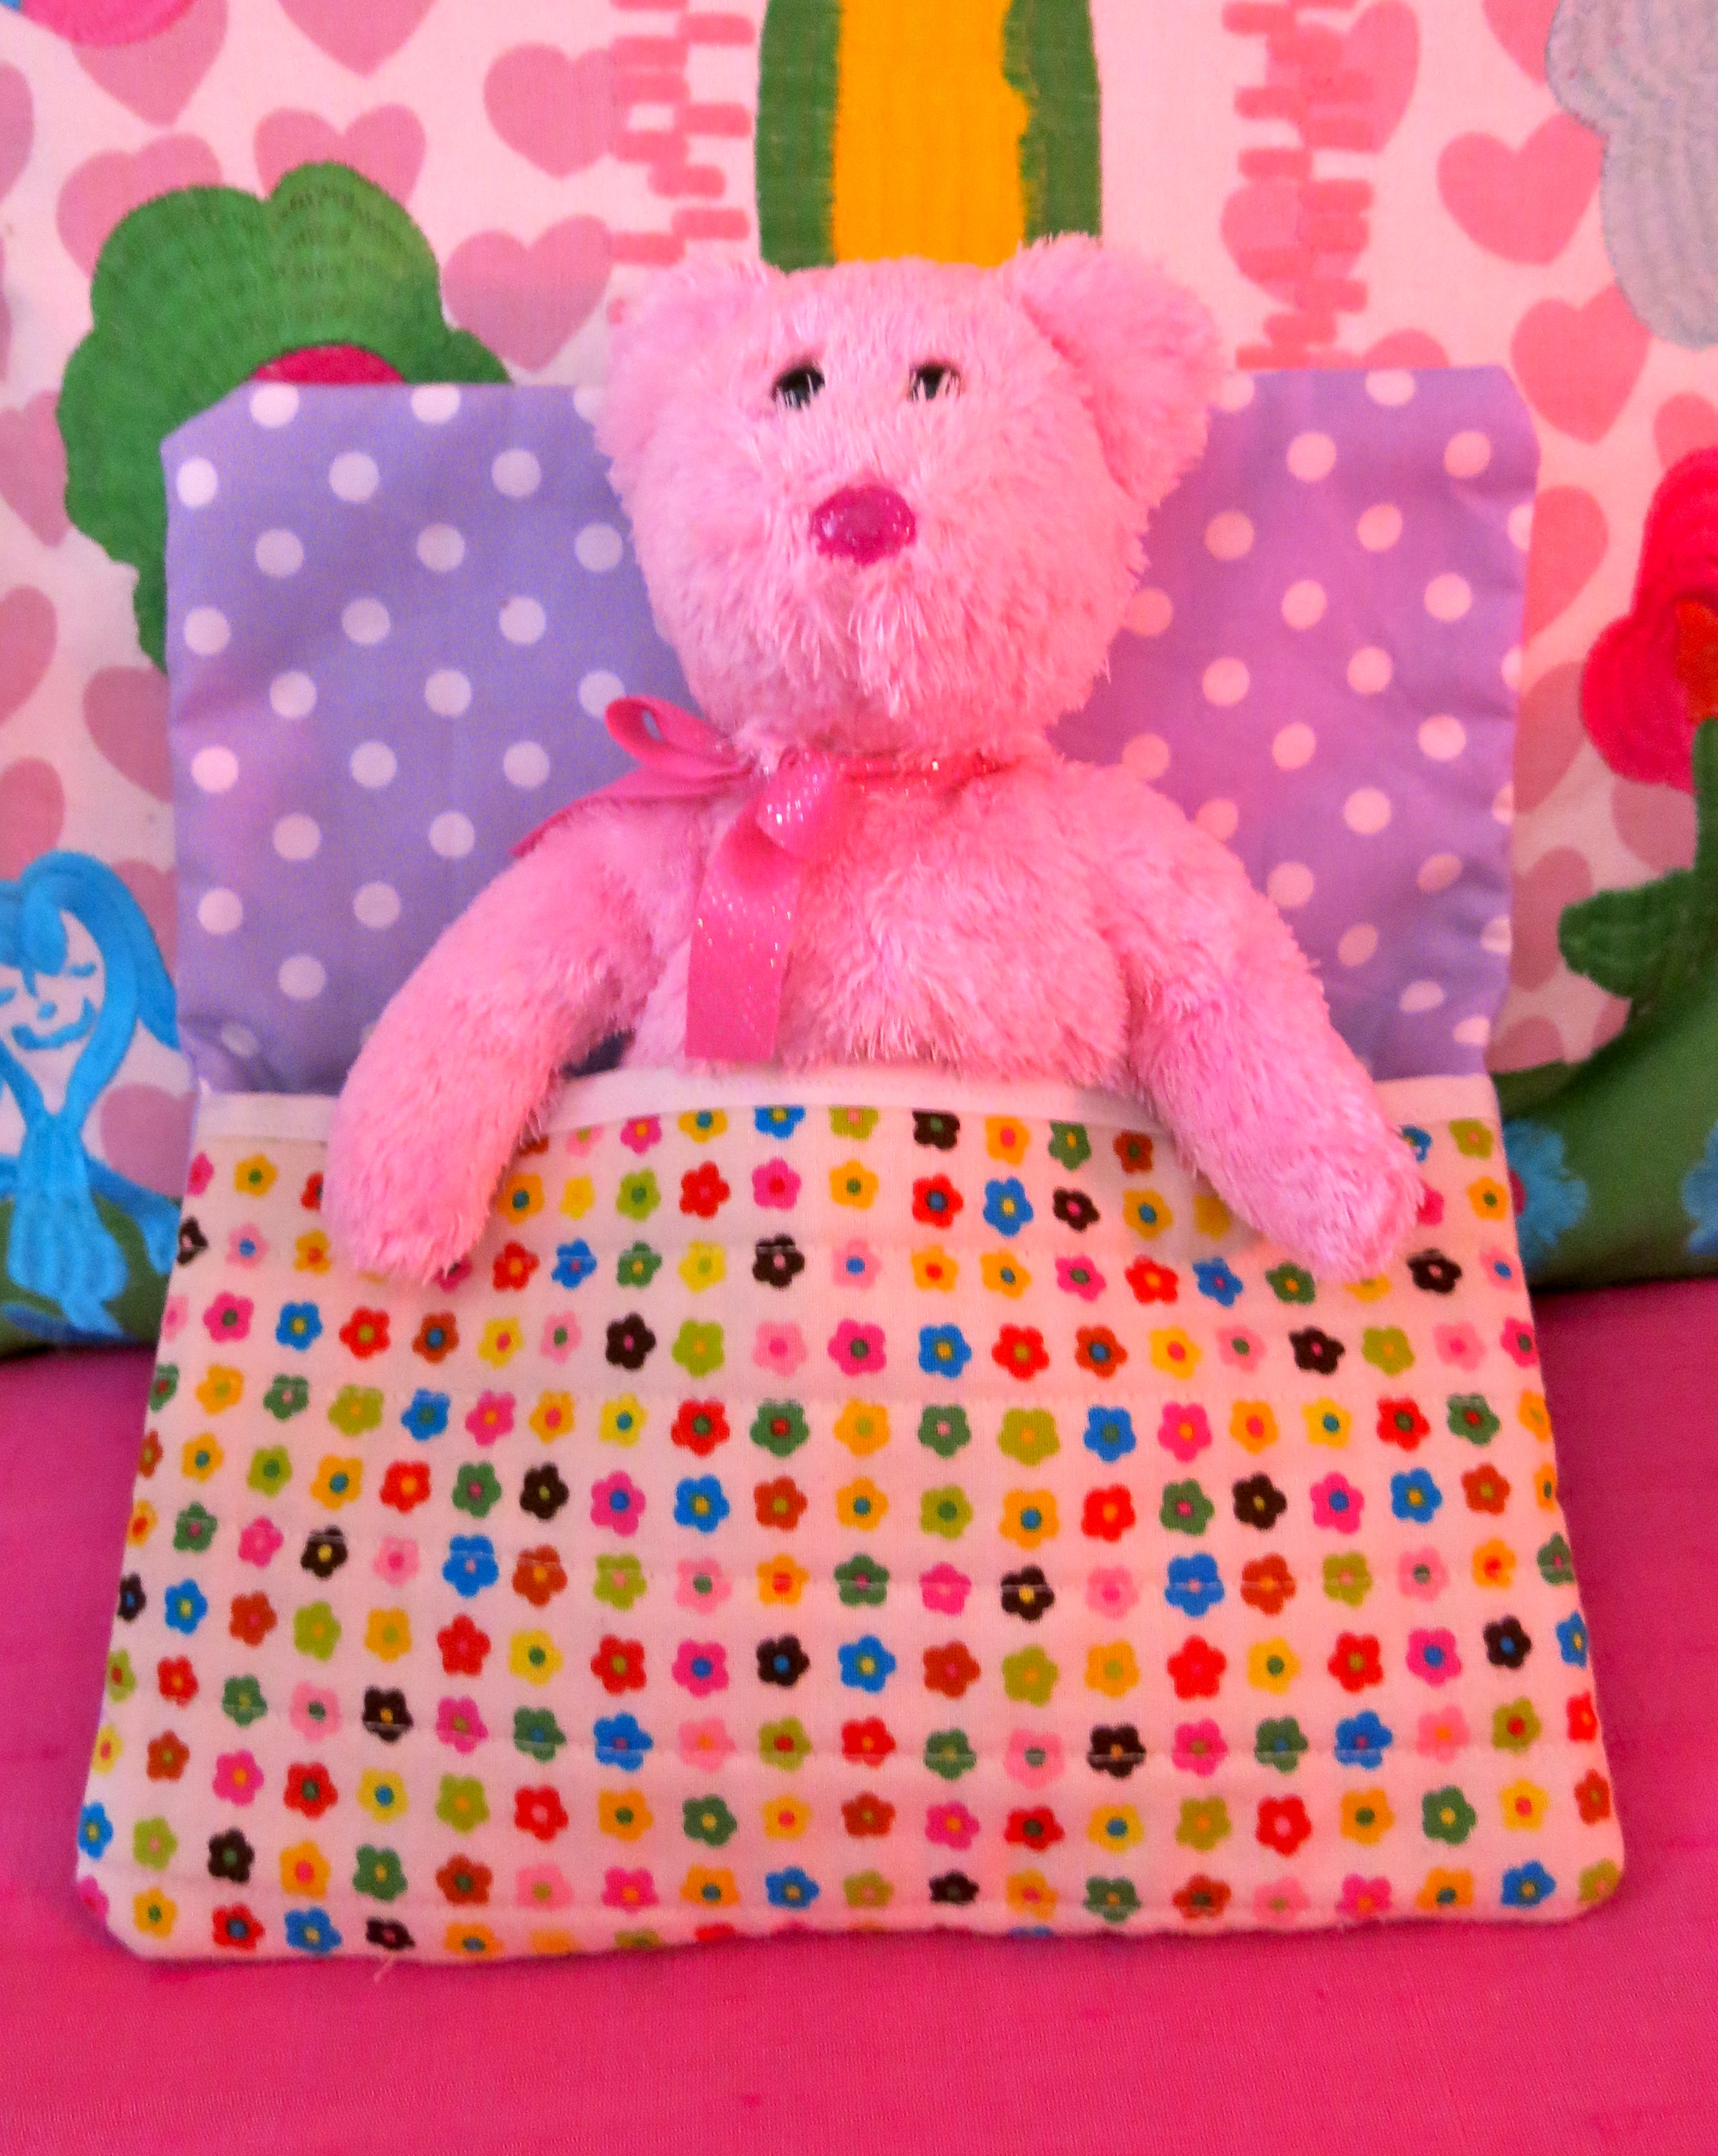 Lucy Loves Ya teddy bear sleeping bag sewing project